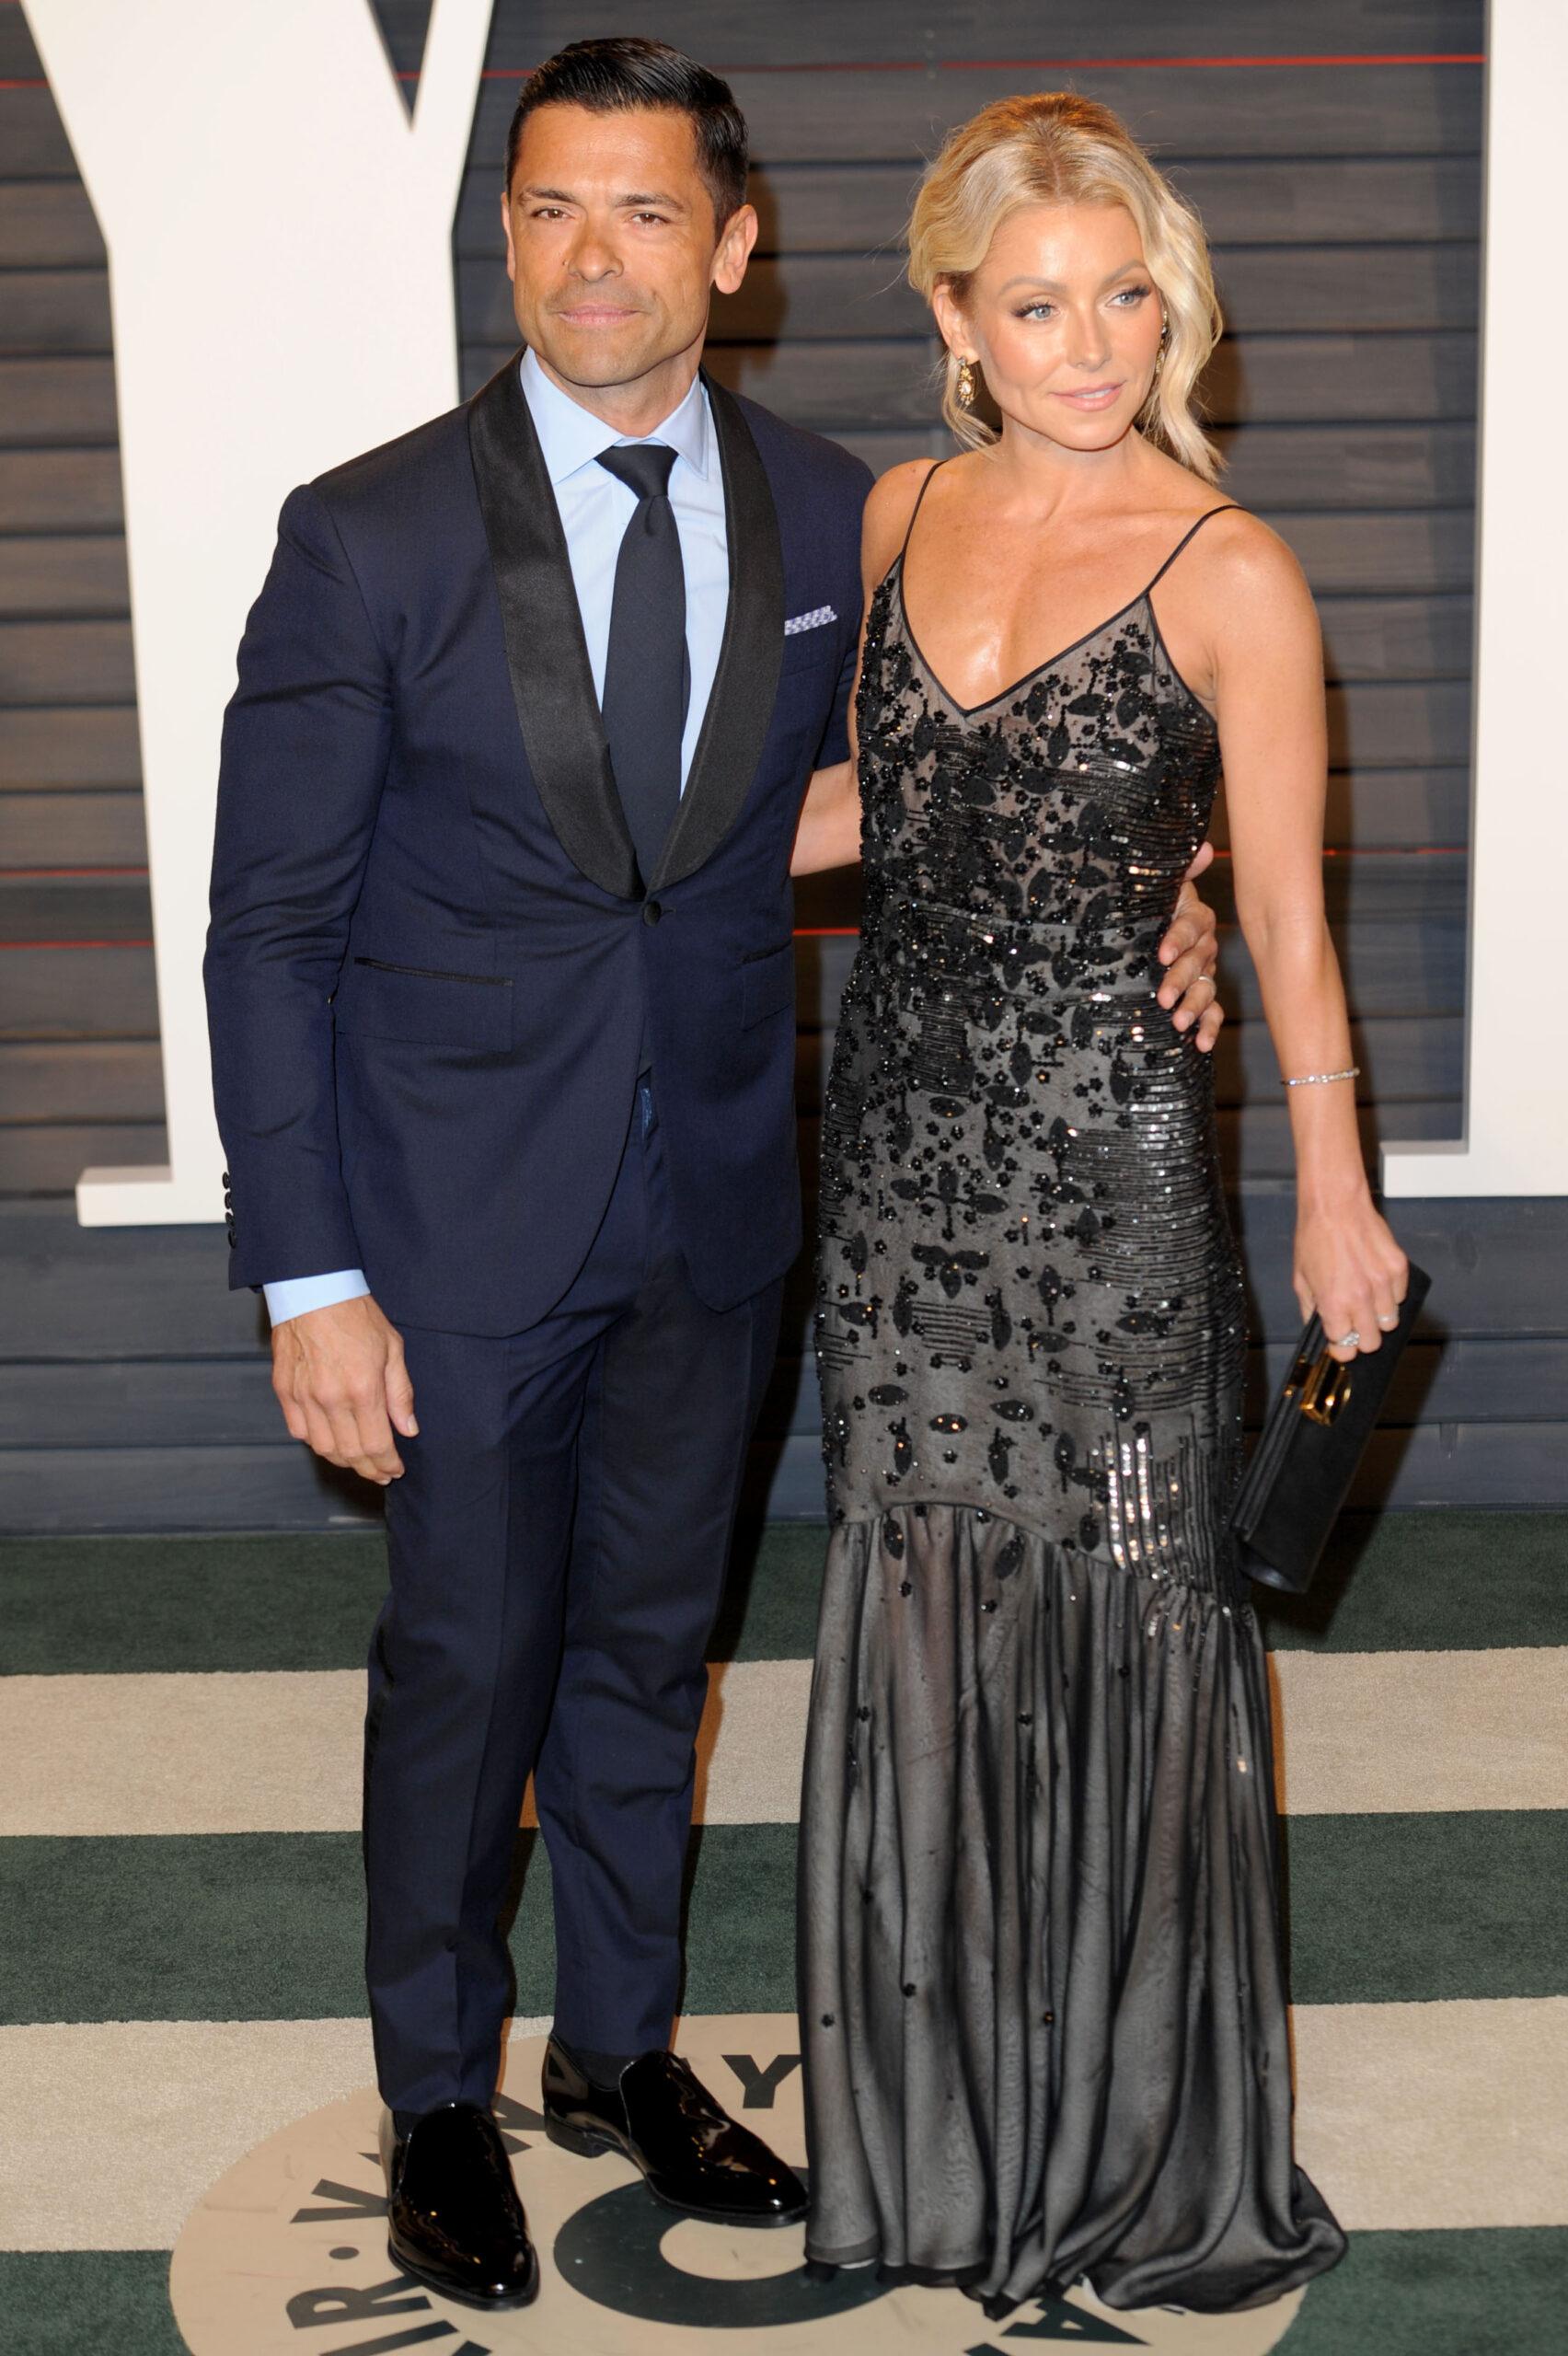 Kelly Ripa and husband Mark Consuelos at the Vanity Fair Oscar Party in LA